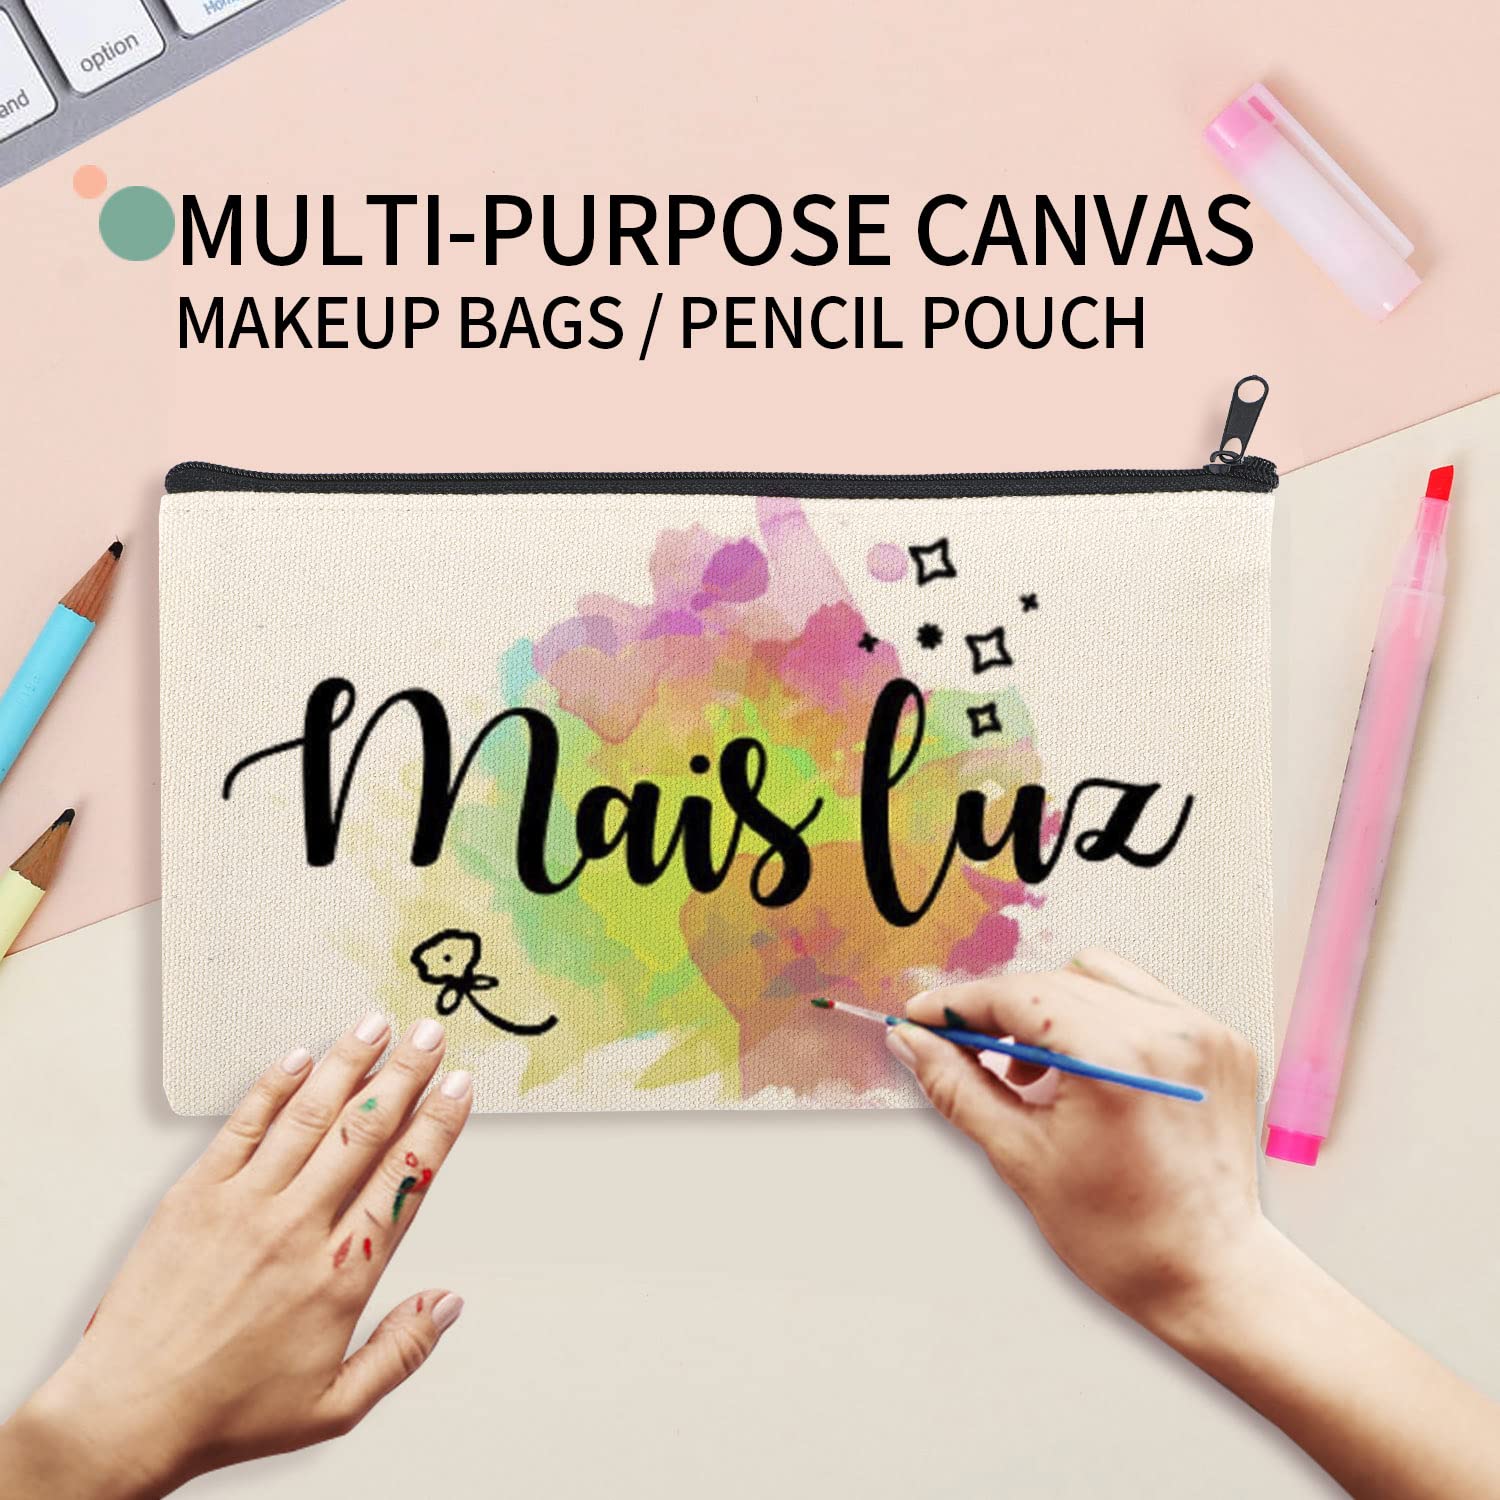 PABUES 8×4.7 Inch Blank DIY Craft Bag Canvas Pencil Case Blank Makeup Bags- Canvas Pencil Pouch Bulk Canvas Cosmetic Bag Multi-Purpose Travel Toiletry Bag Canvas Zipper Bags